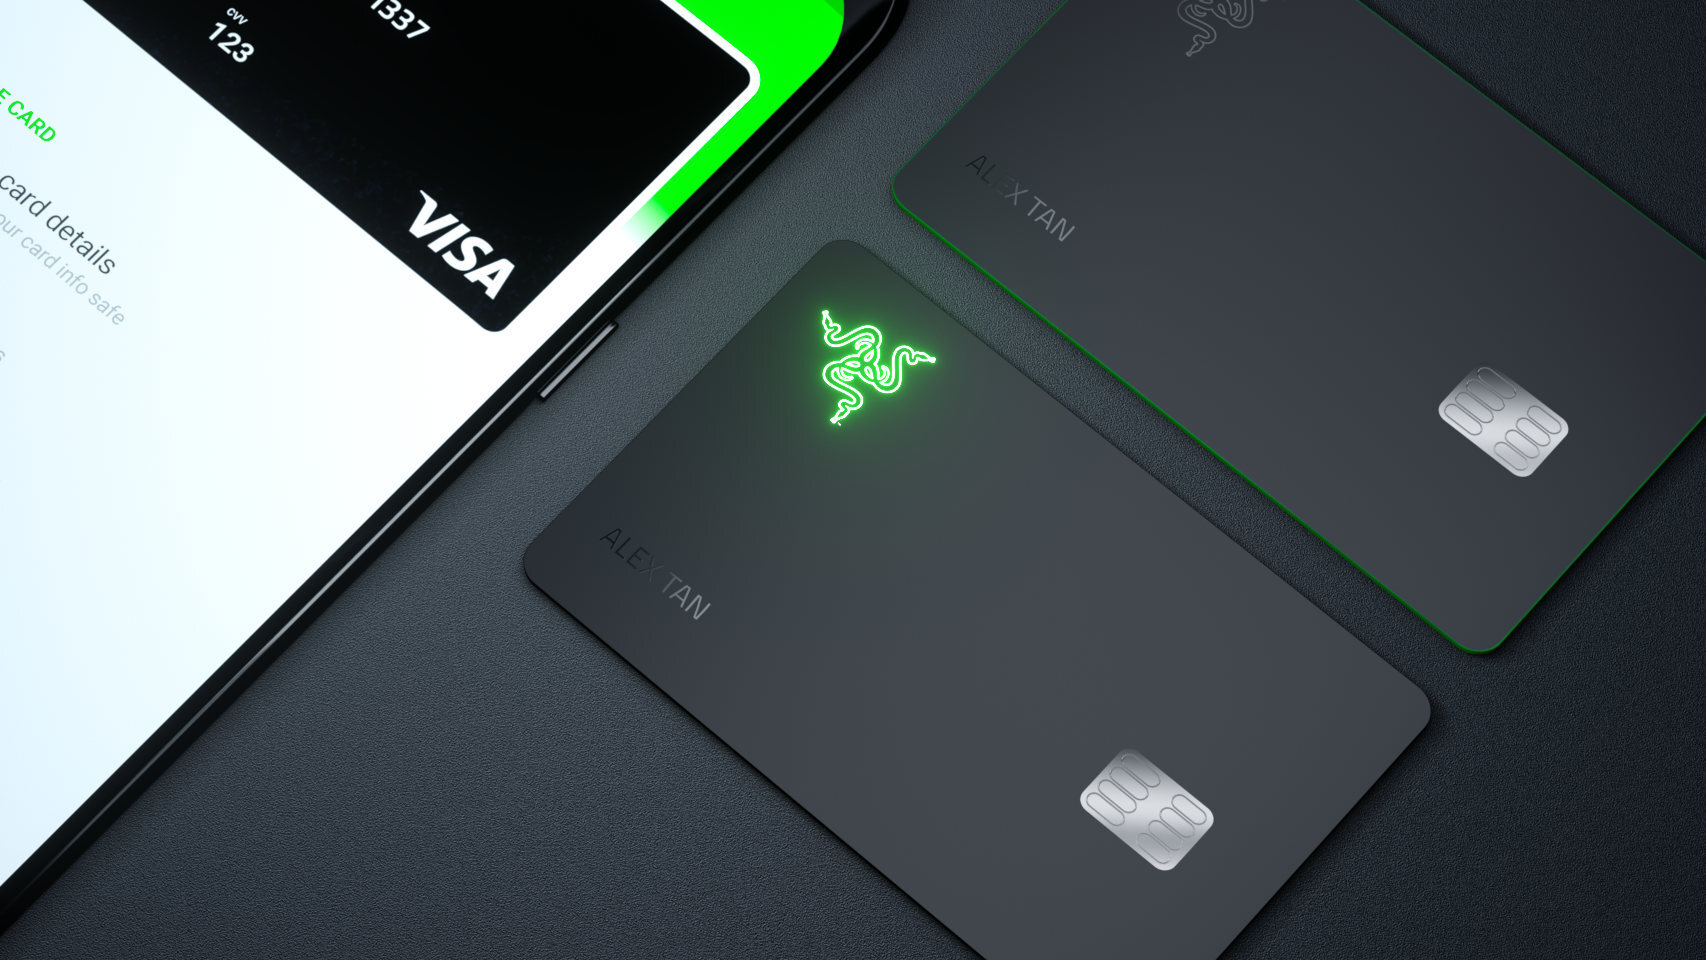 La Razer Card, la nueva tarjeta para el servicio Razer Pay